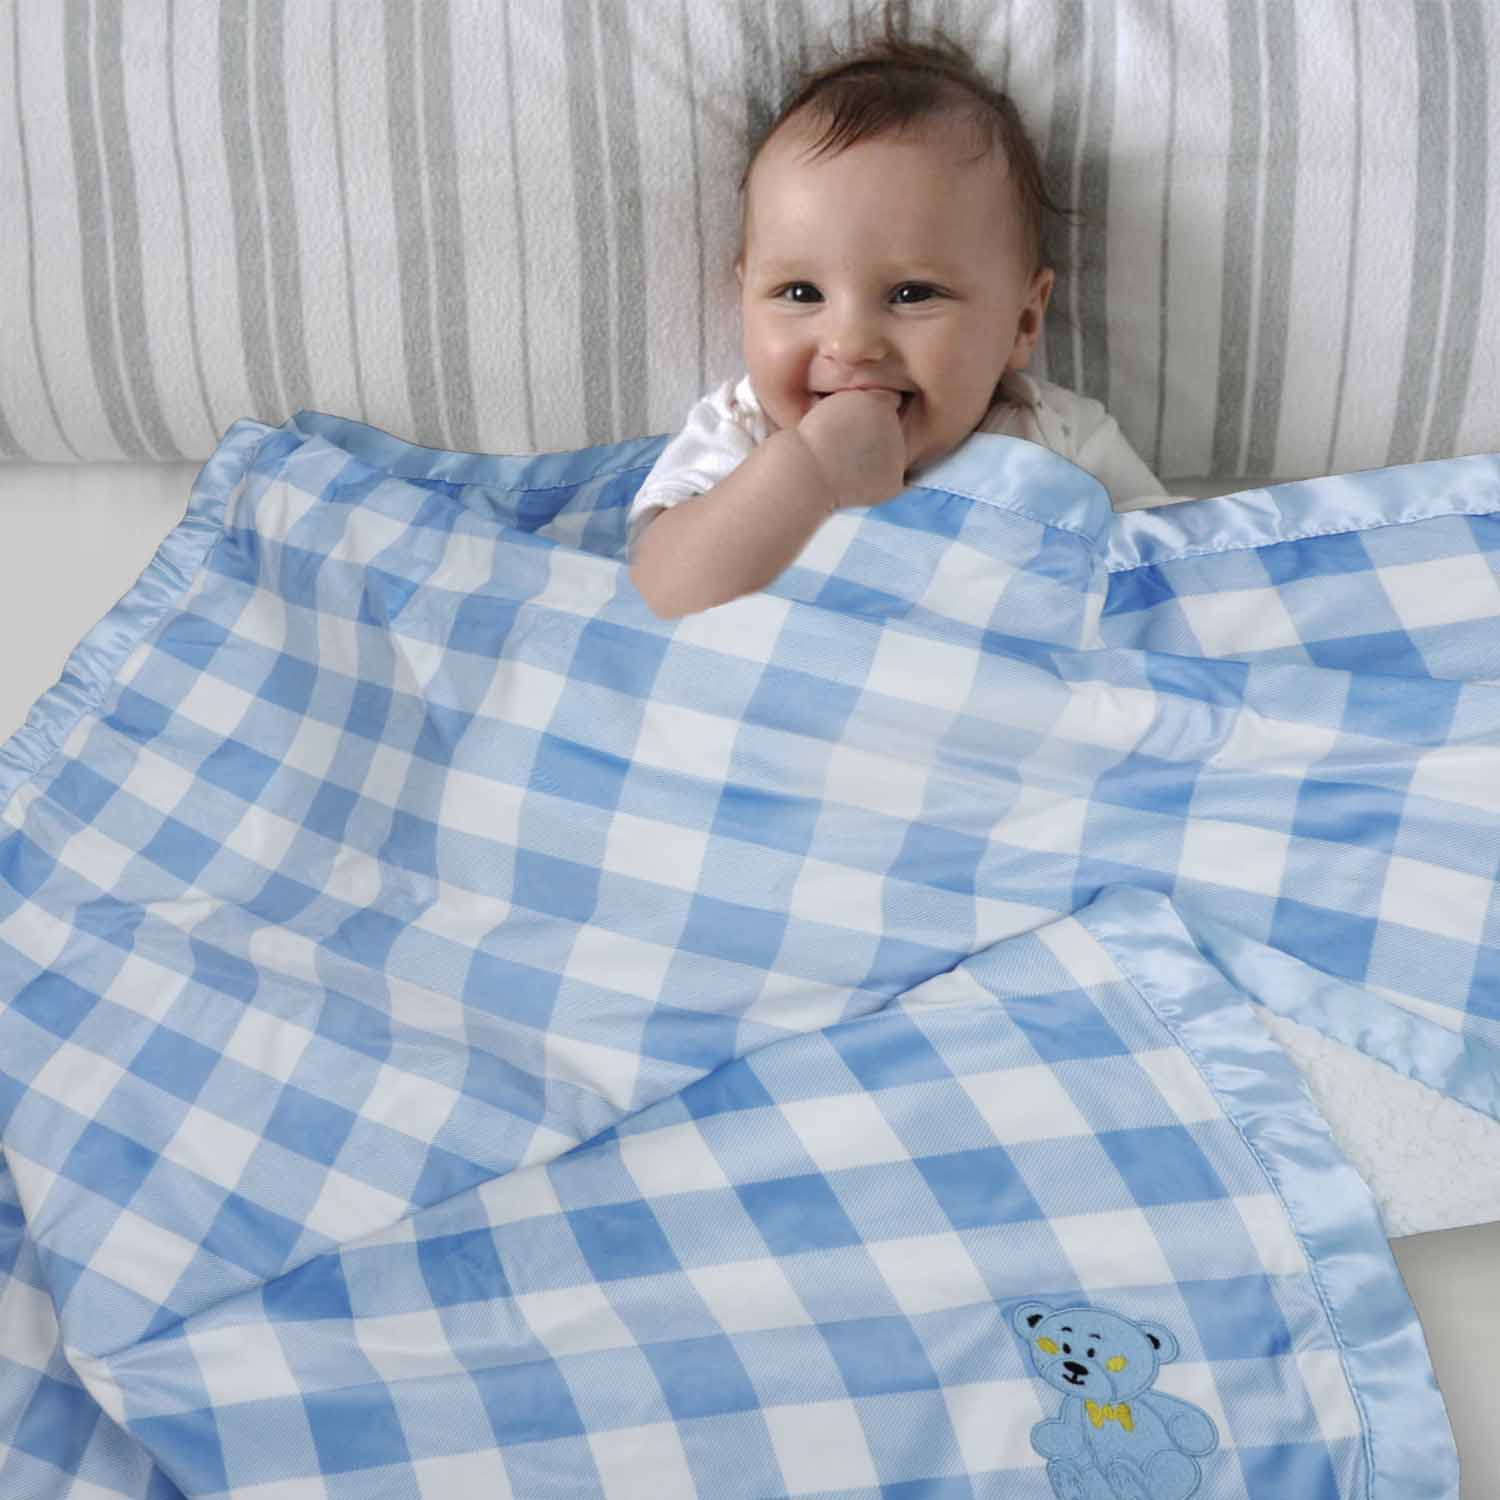 Baby Moo Checkered Charm Soft Fur Blanket - Blue